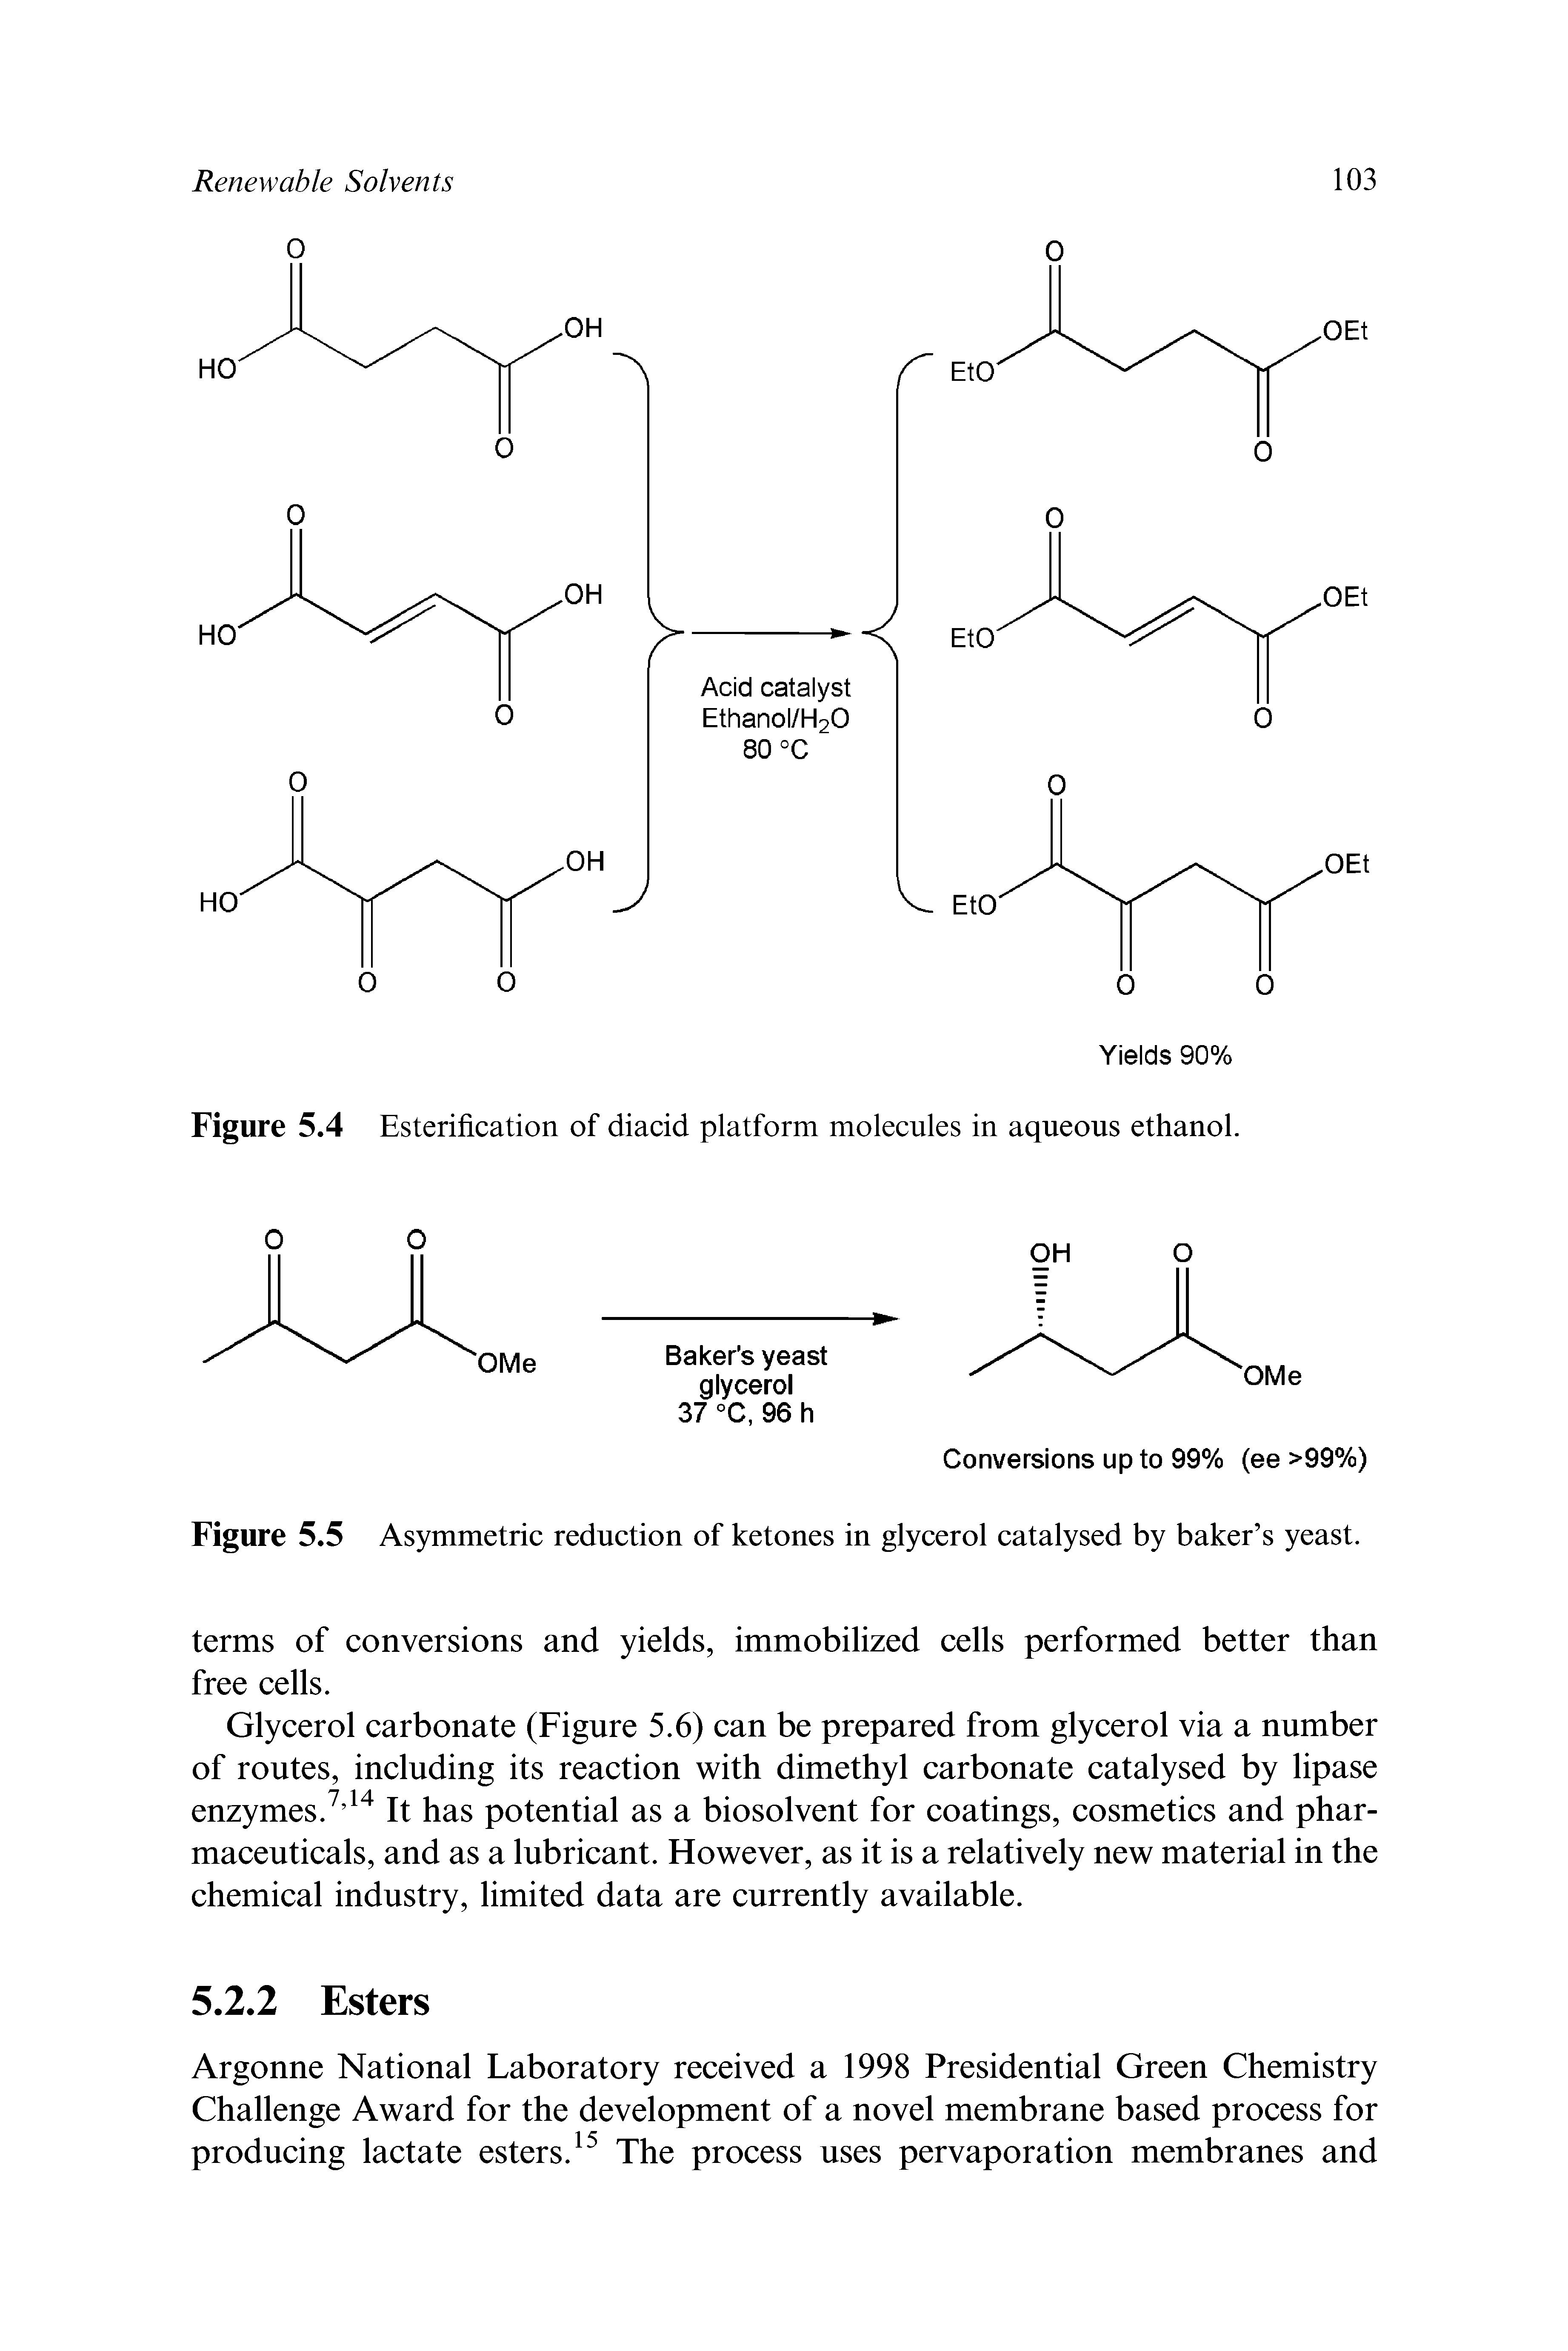 Figure 5.4 Esterification of diacid platform molecules in aqueous ethanol.